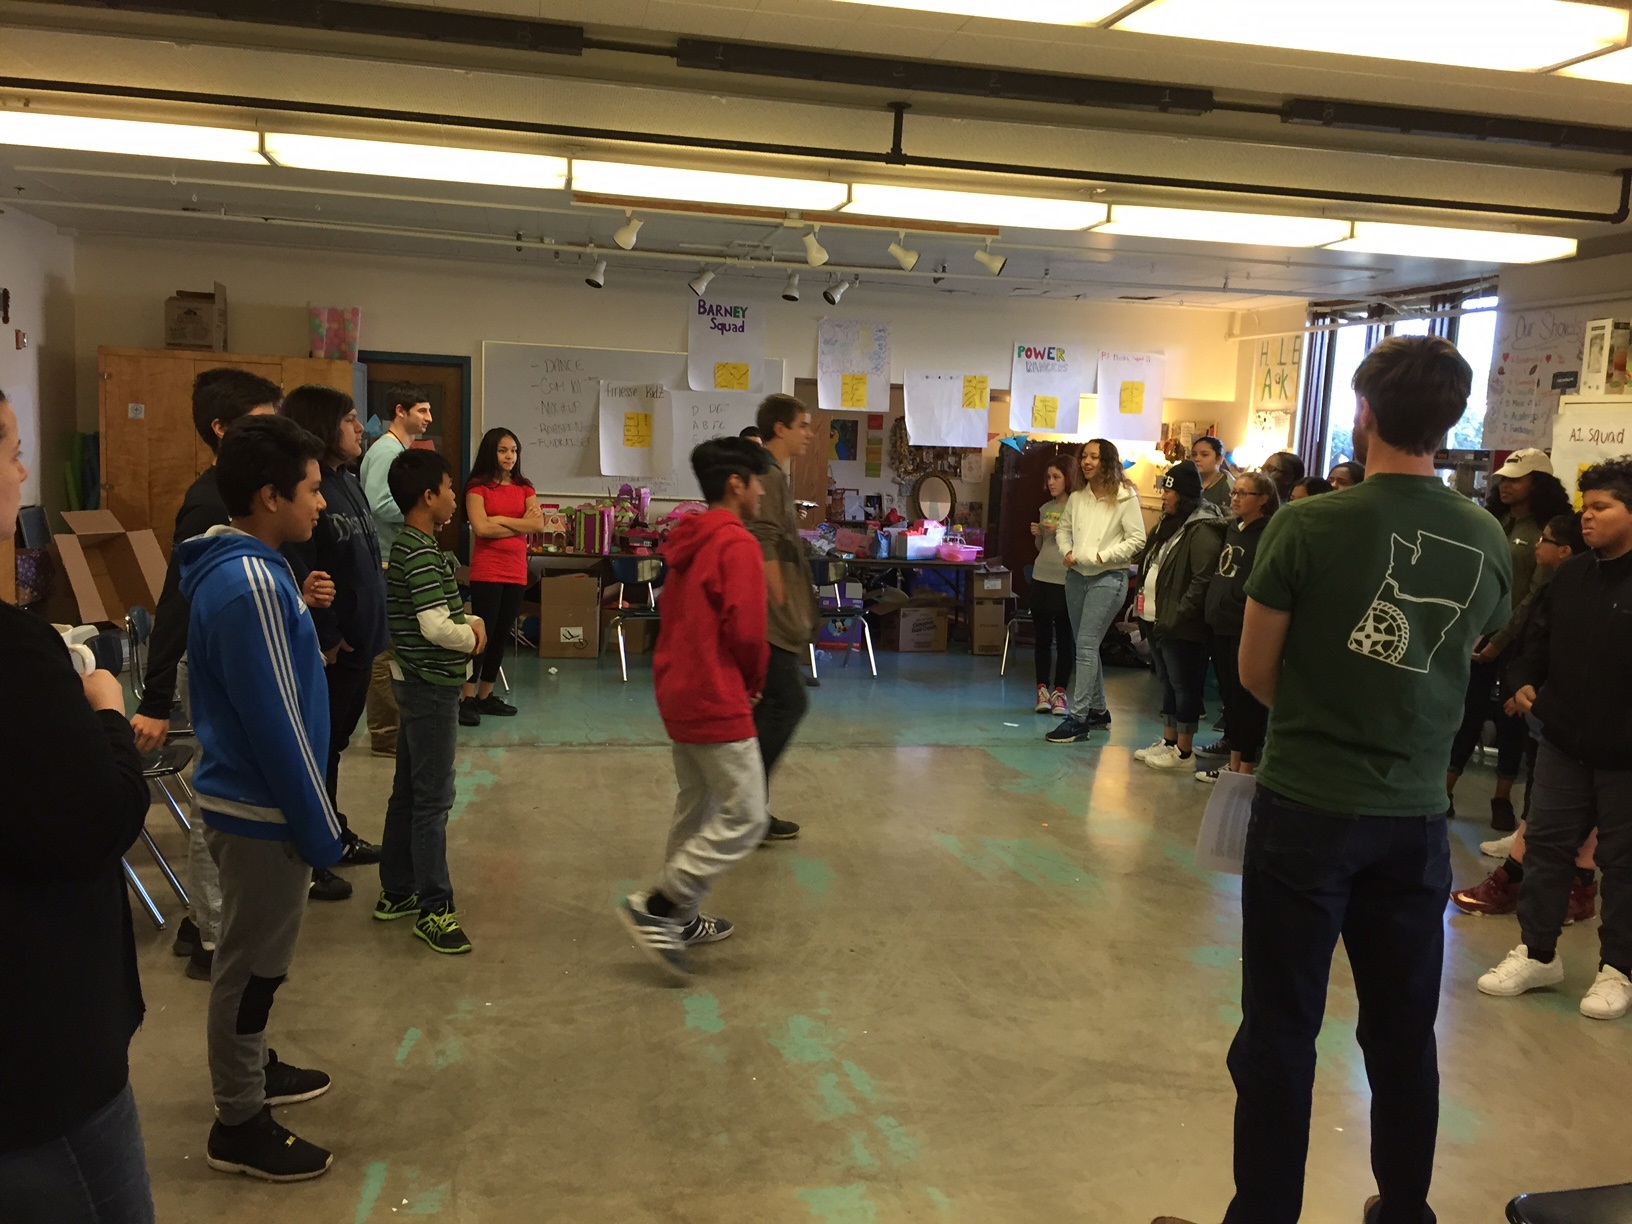 Portland Schools Program Ends a Successful 12 Week Session